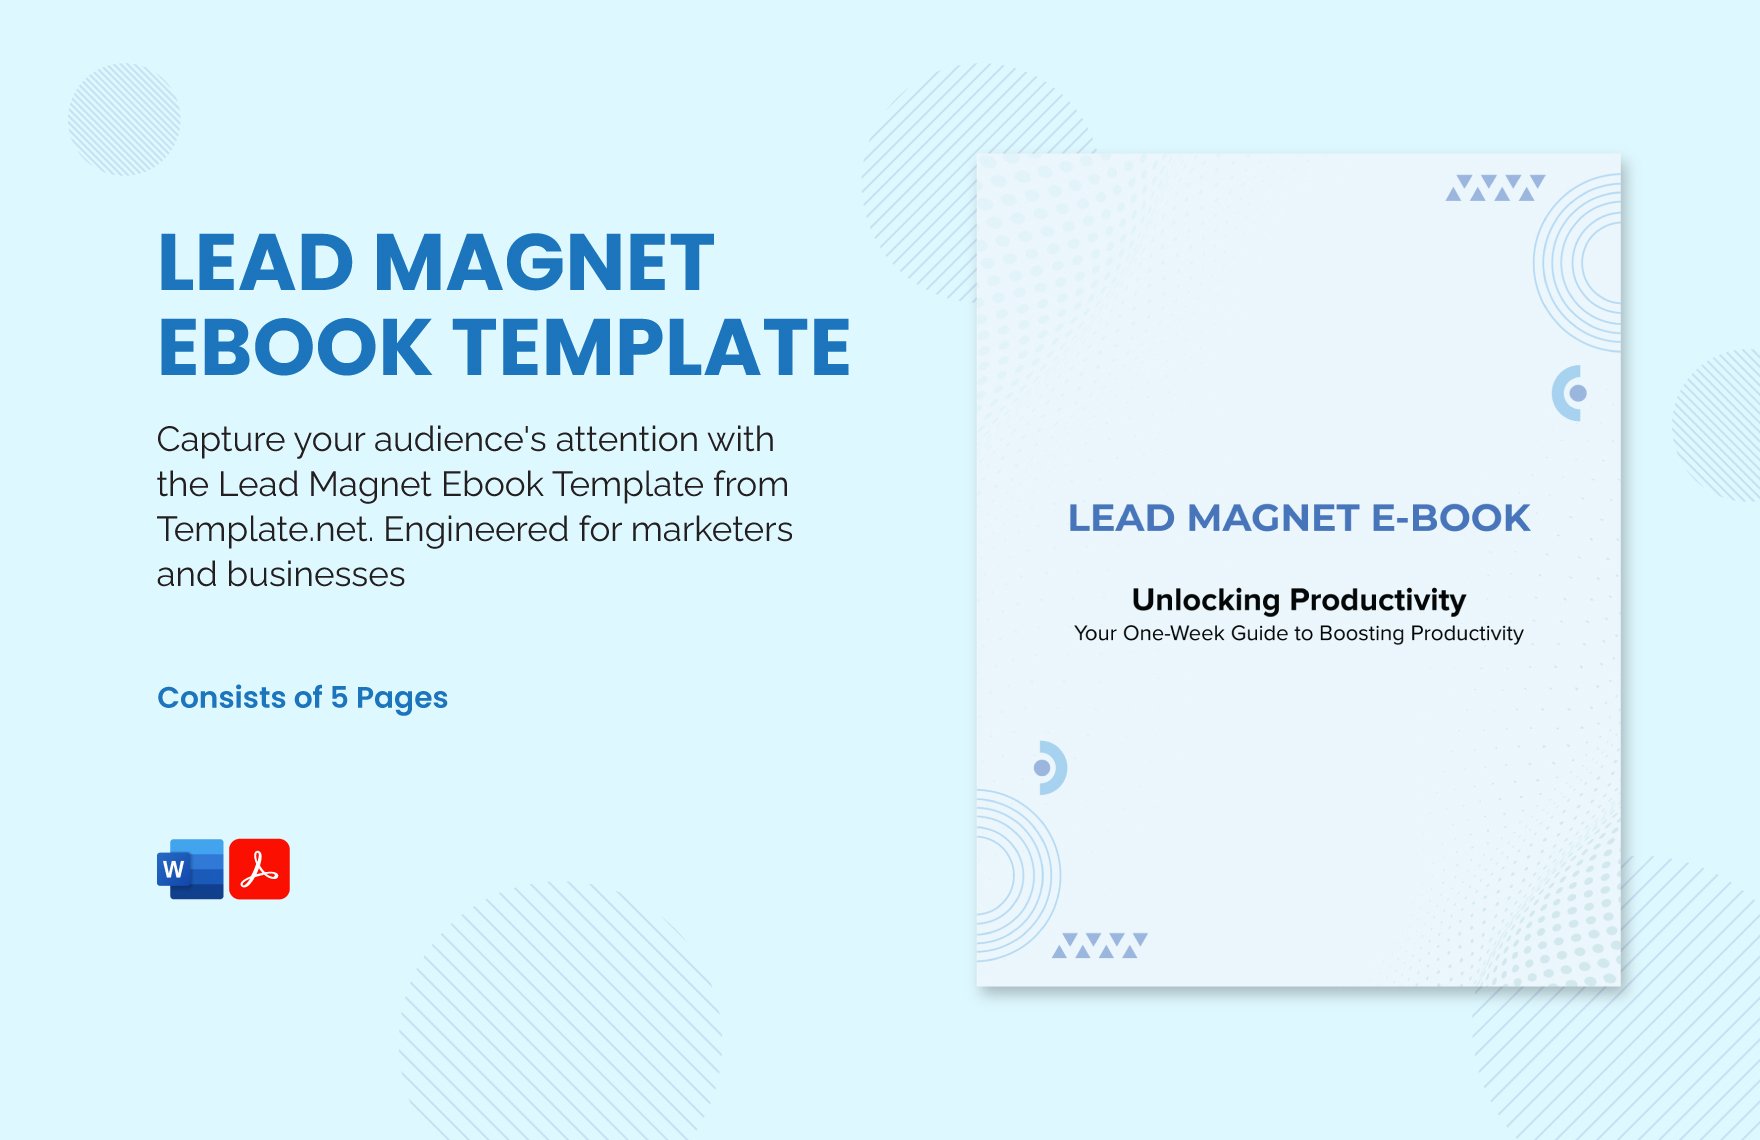 Lead Magnet Ebook Template